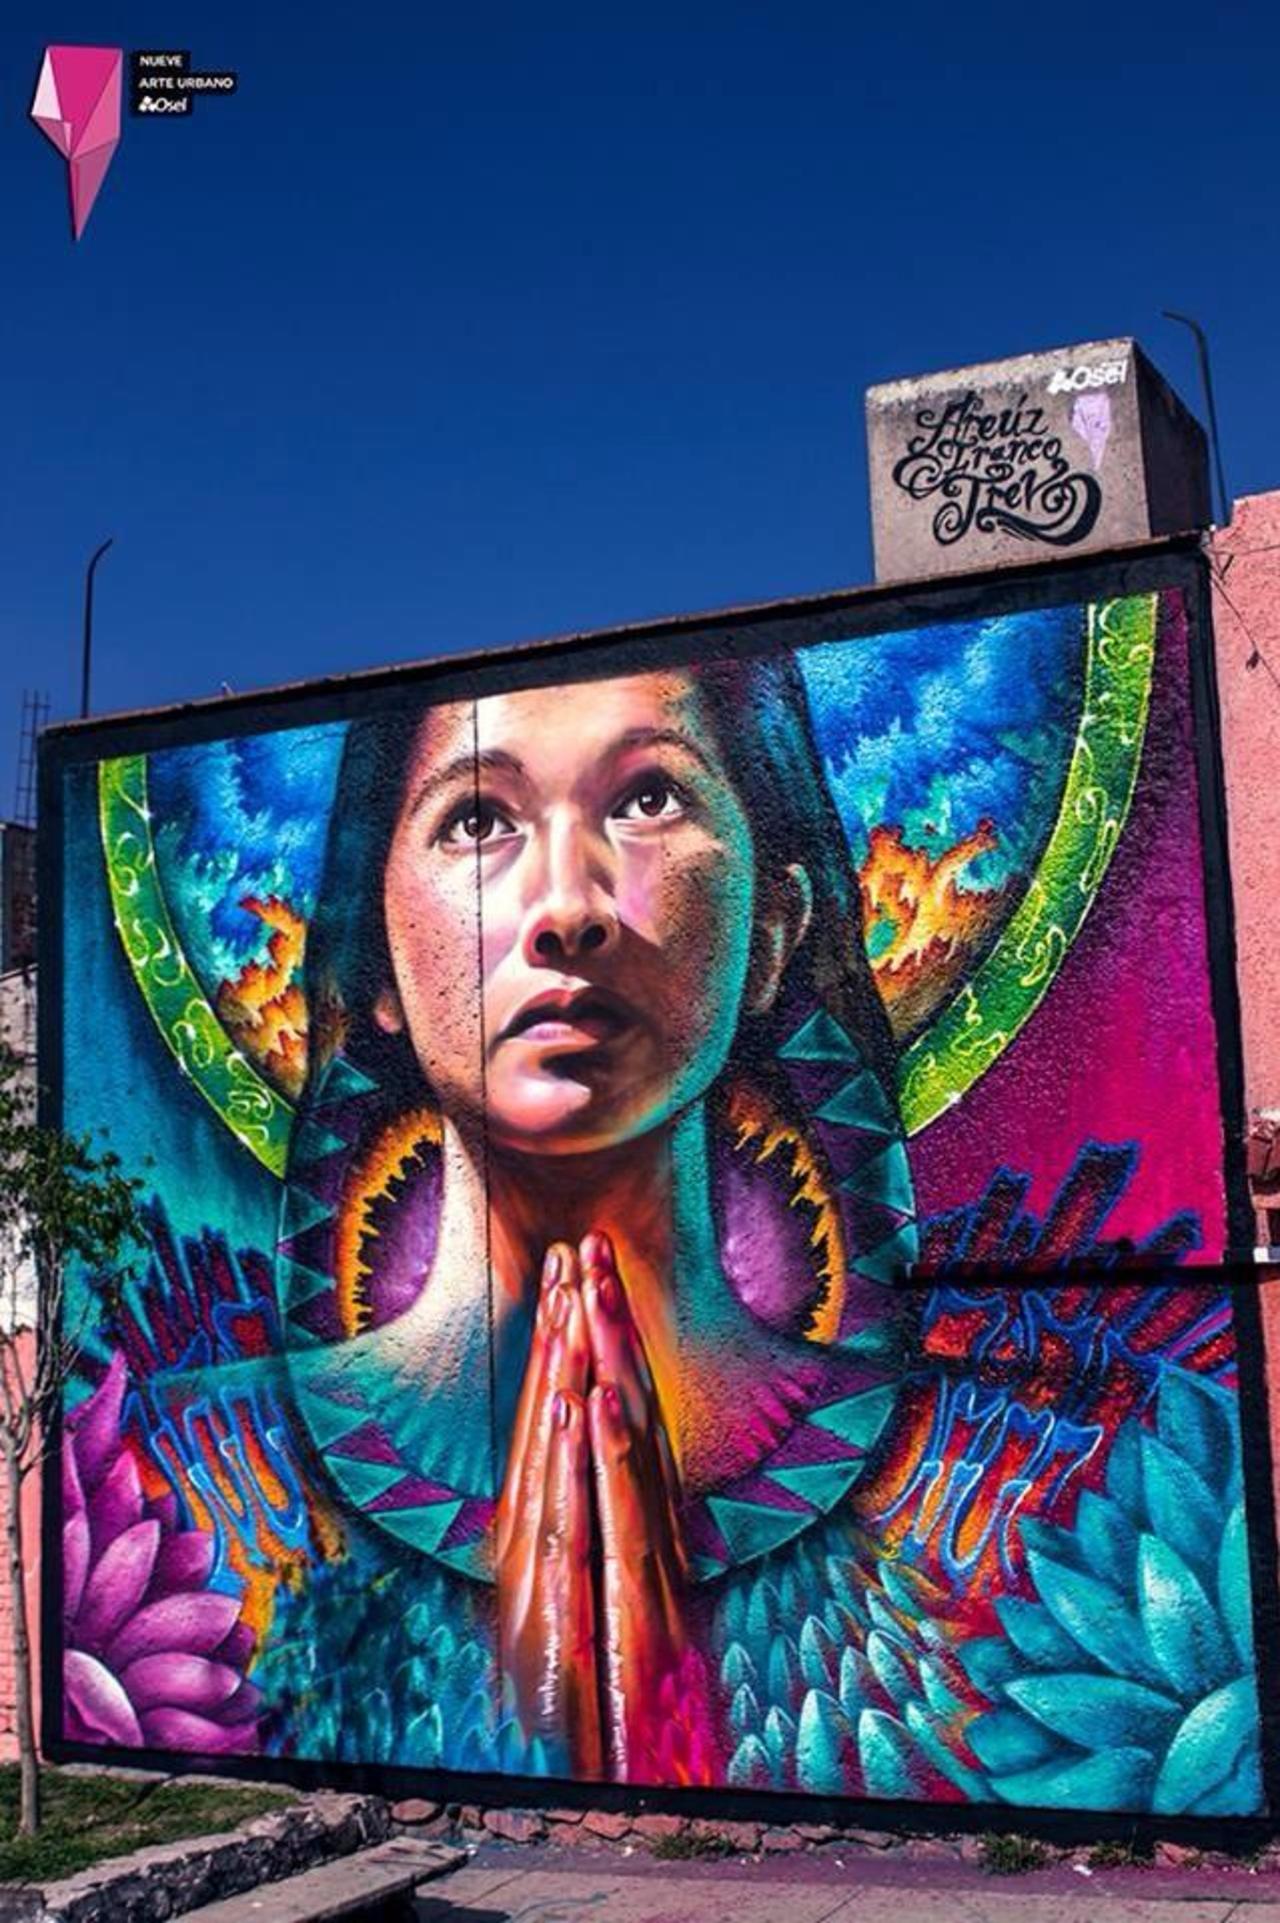 Artist Areúz 77 new Street Art mural in Queretaro, Mexico #Art #graffiti #mural #streetart http://t.co/PnTgxtqSIK